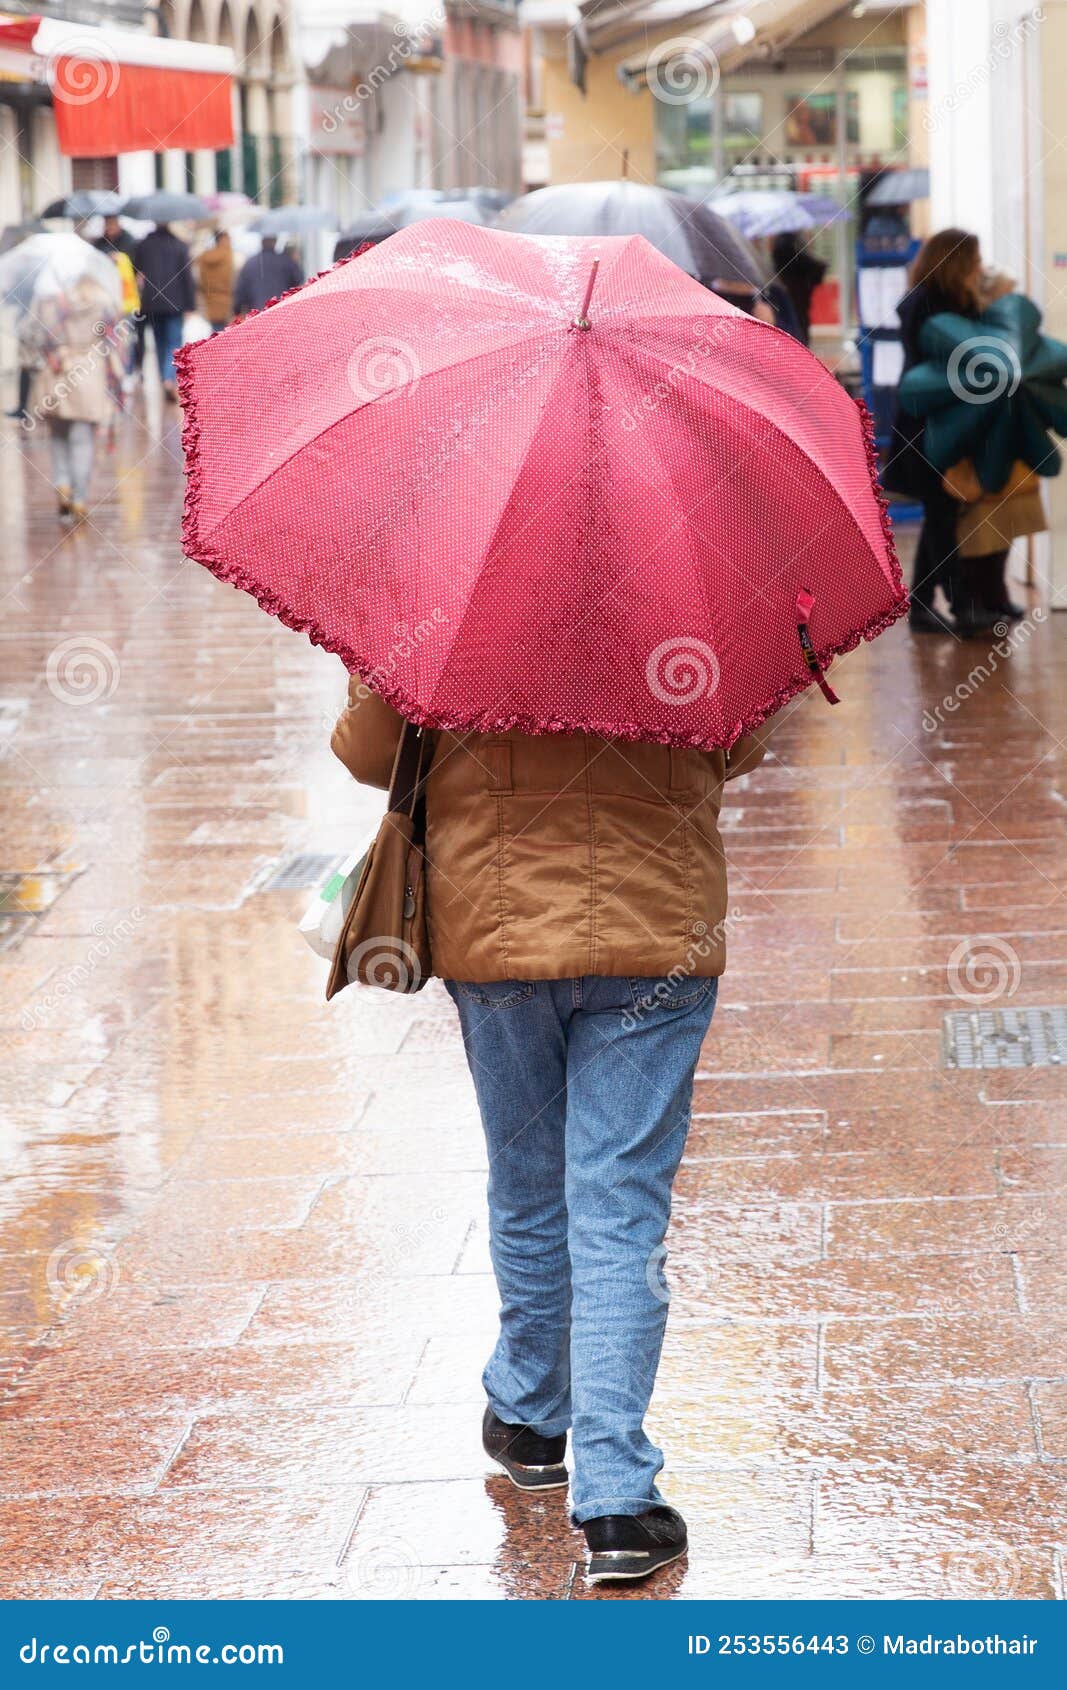 232 Umbrella Raining Shopping Stock Photos - Free & Royalty-Free